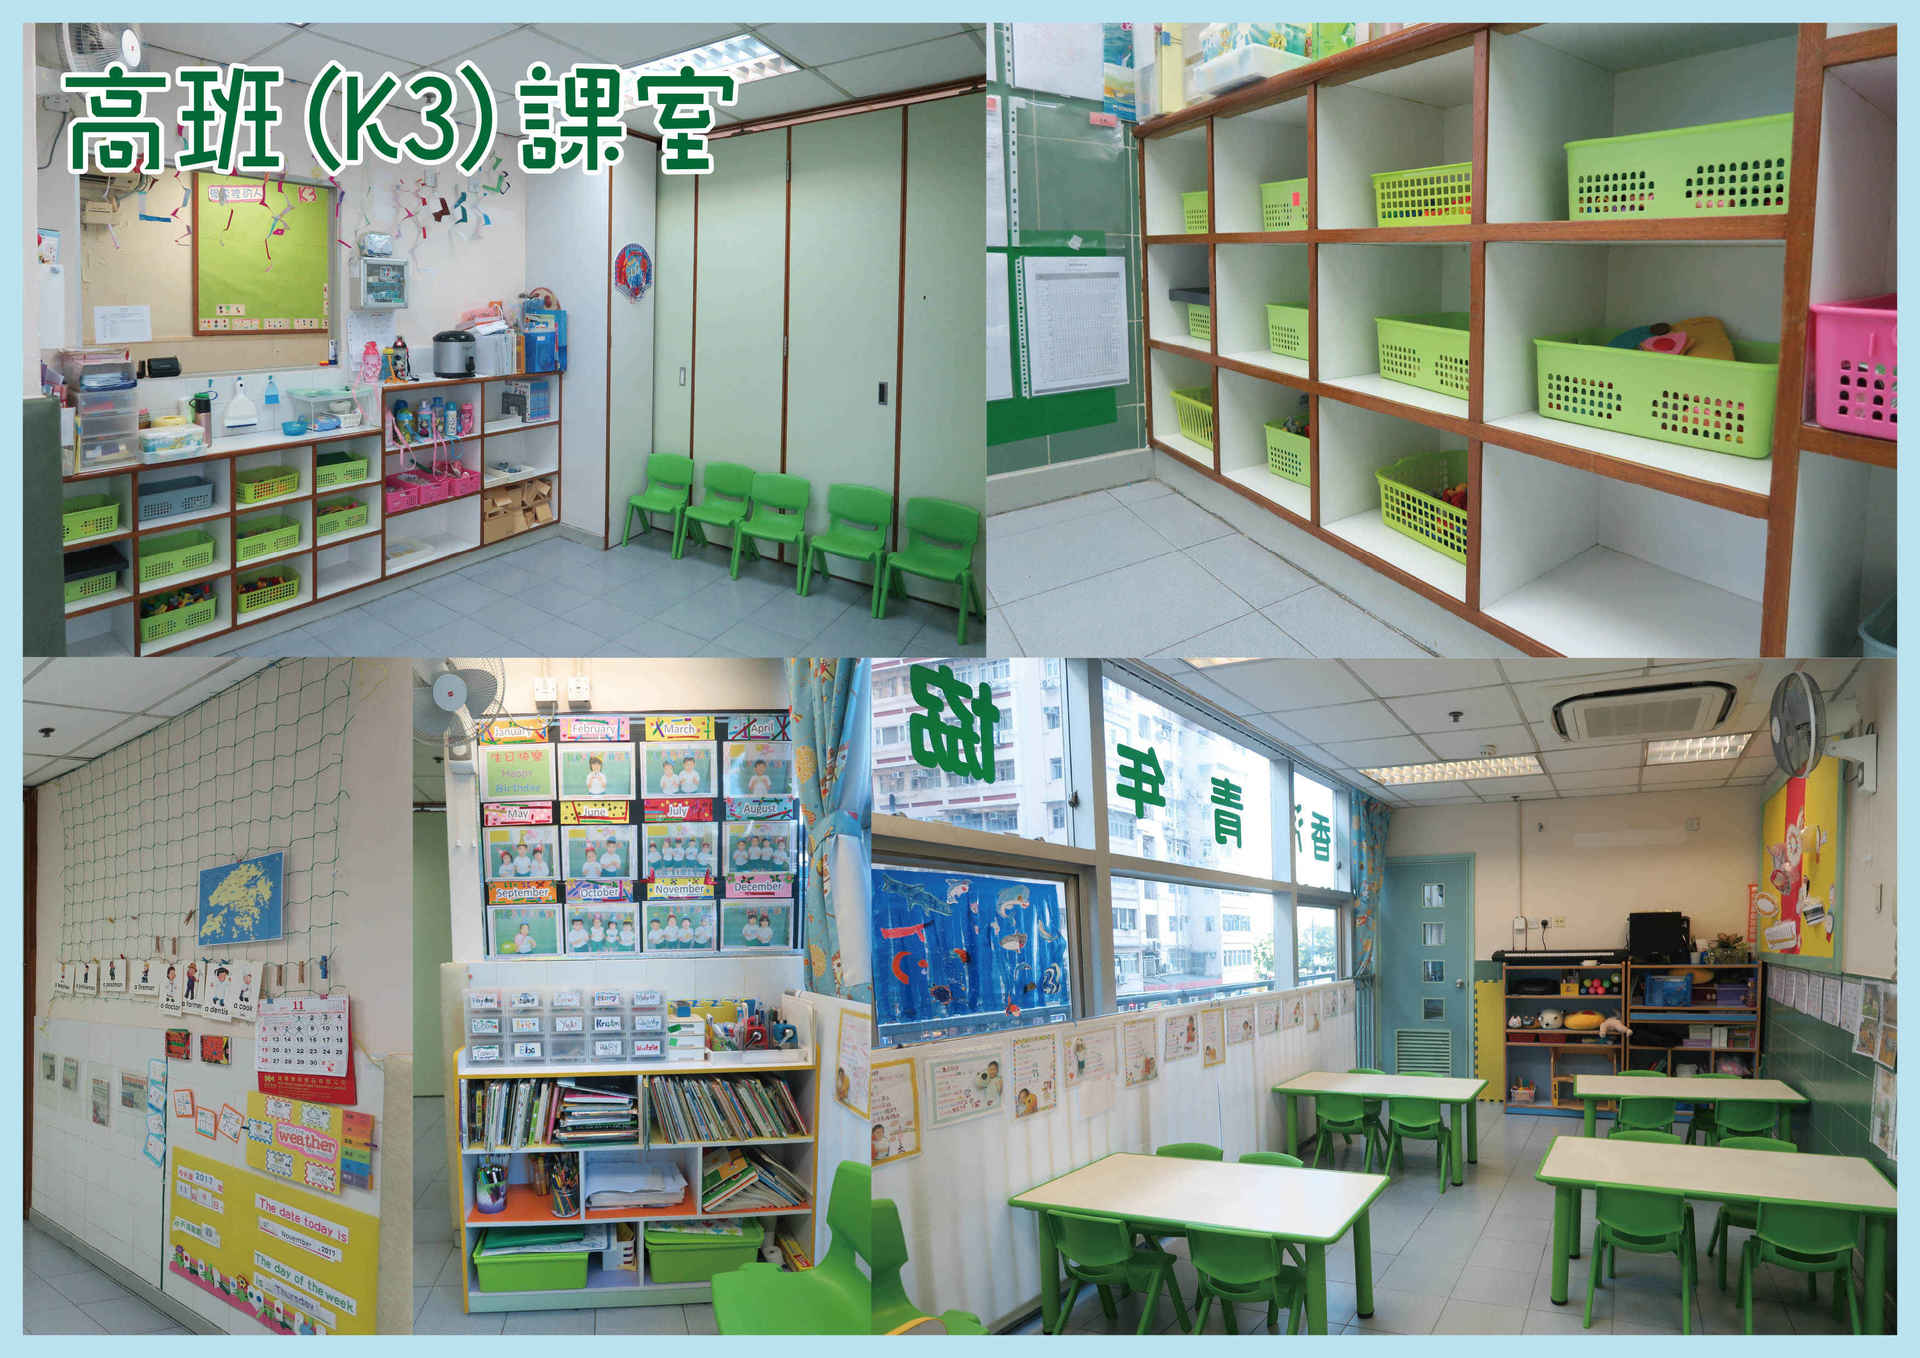 K3 Classroom